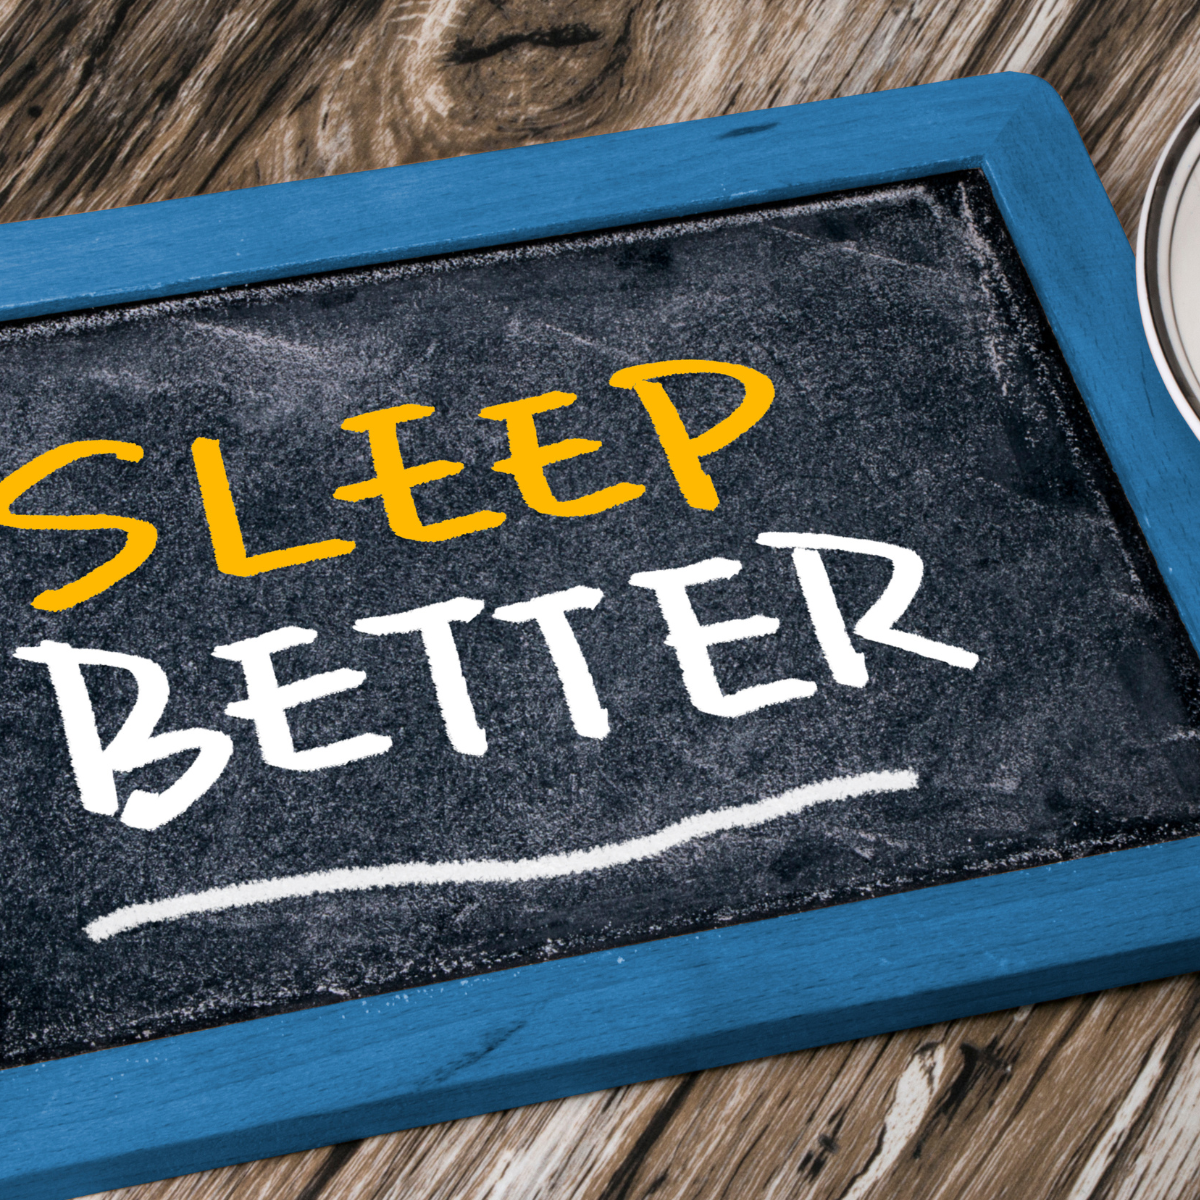 better sleep to fight fatigue